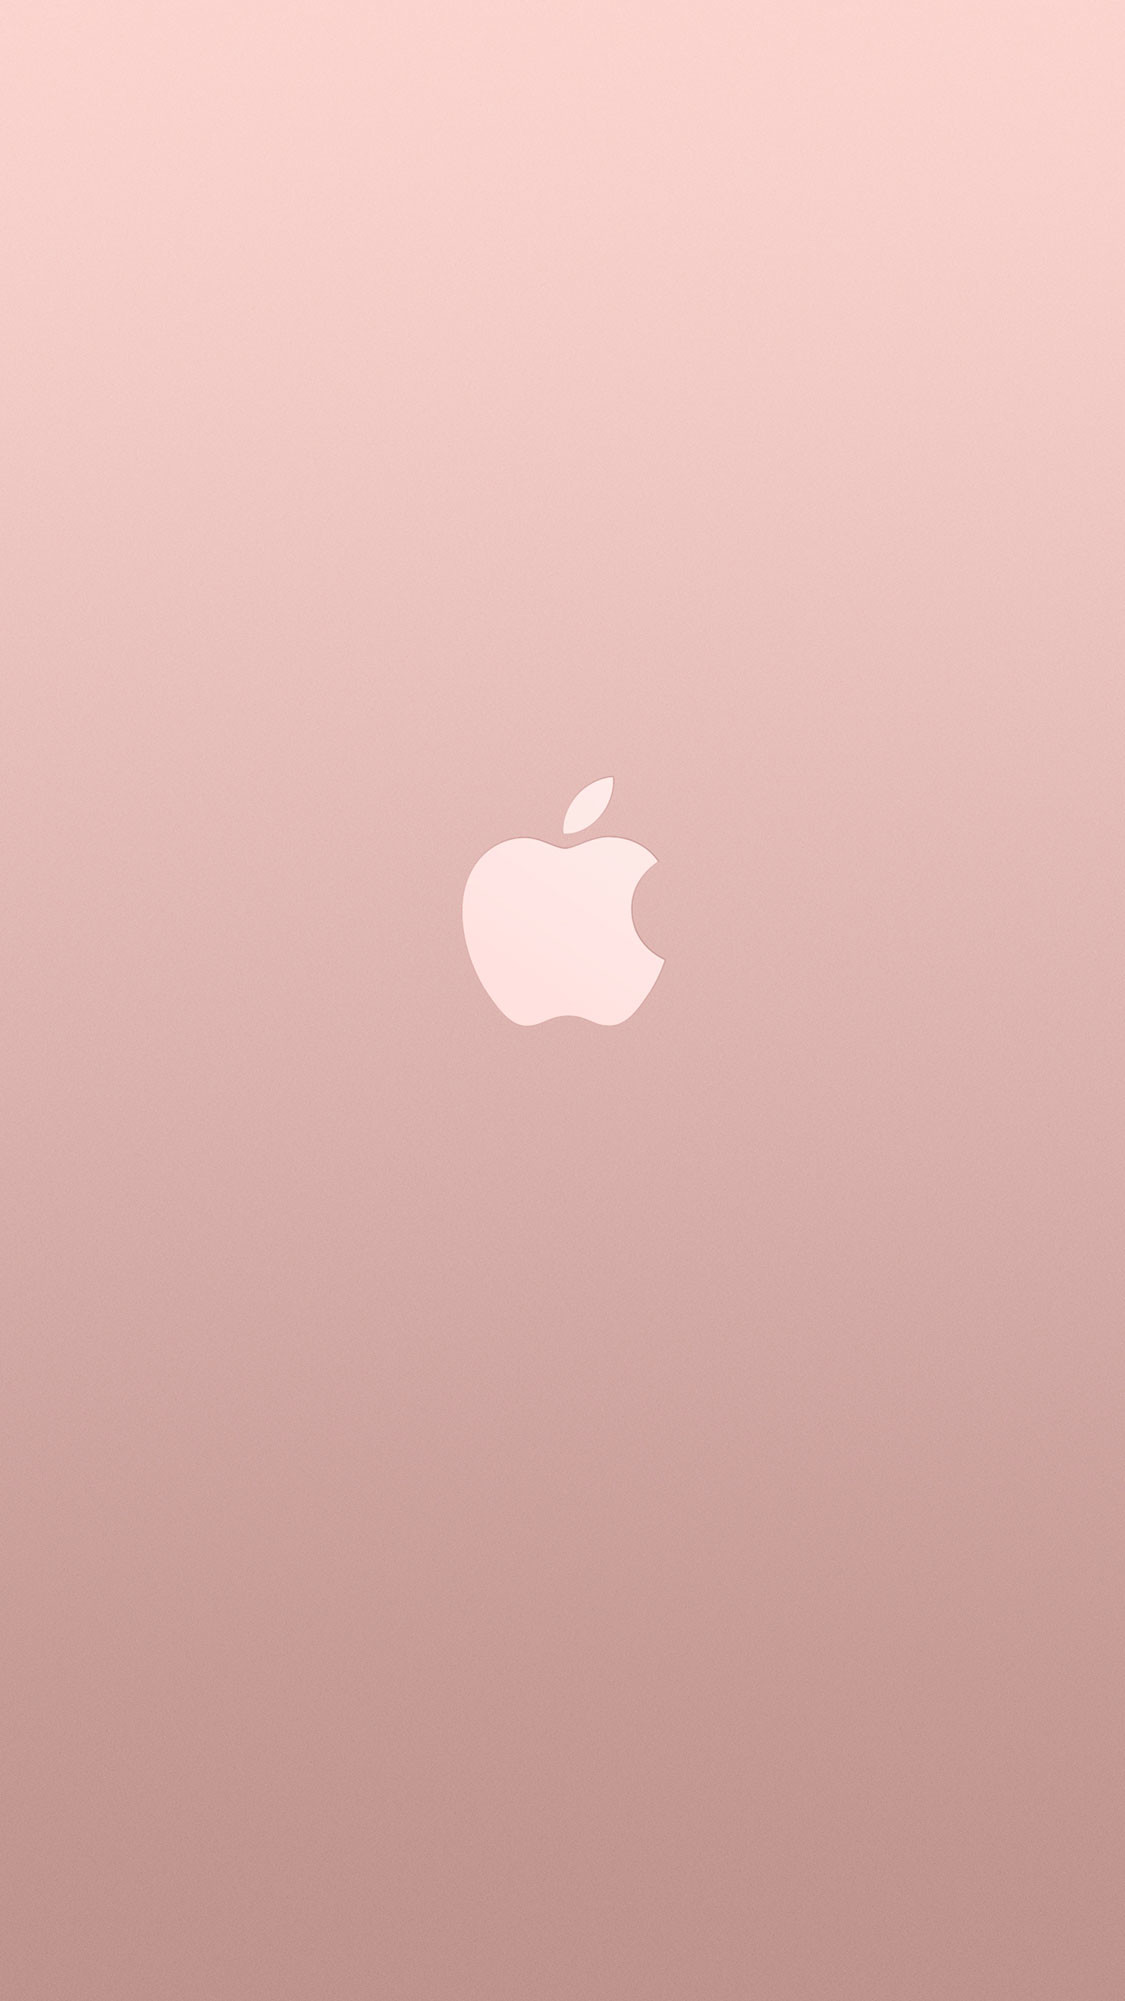 1125x2001 ... Rose-Gold-Apple-iPhone-6s-wallpaper-HD ...